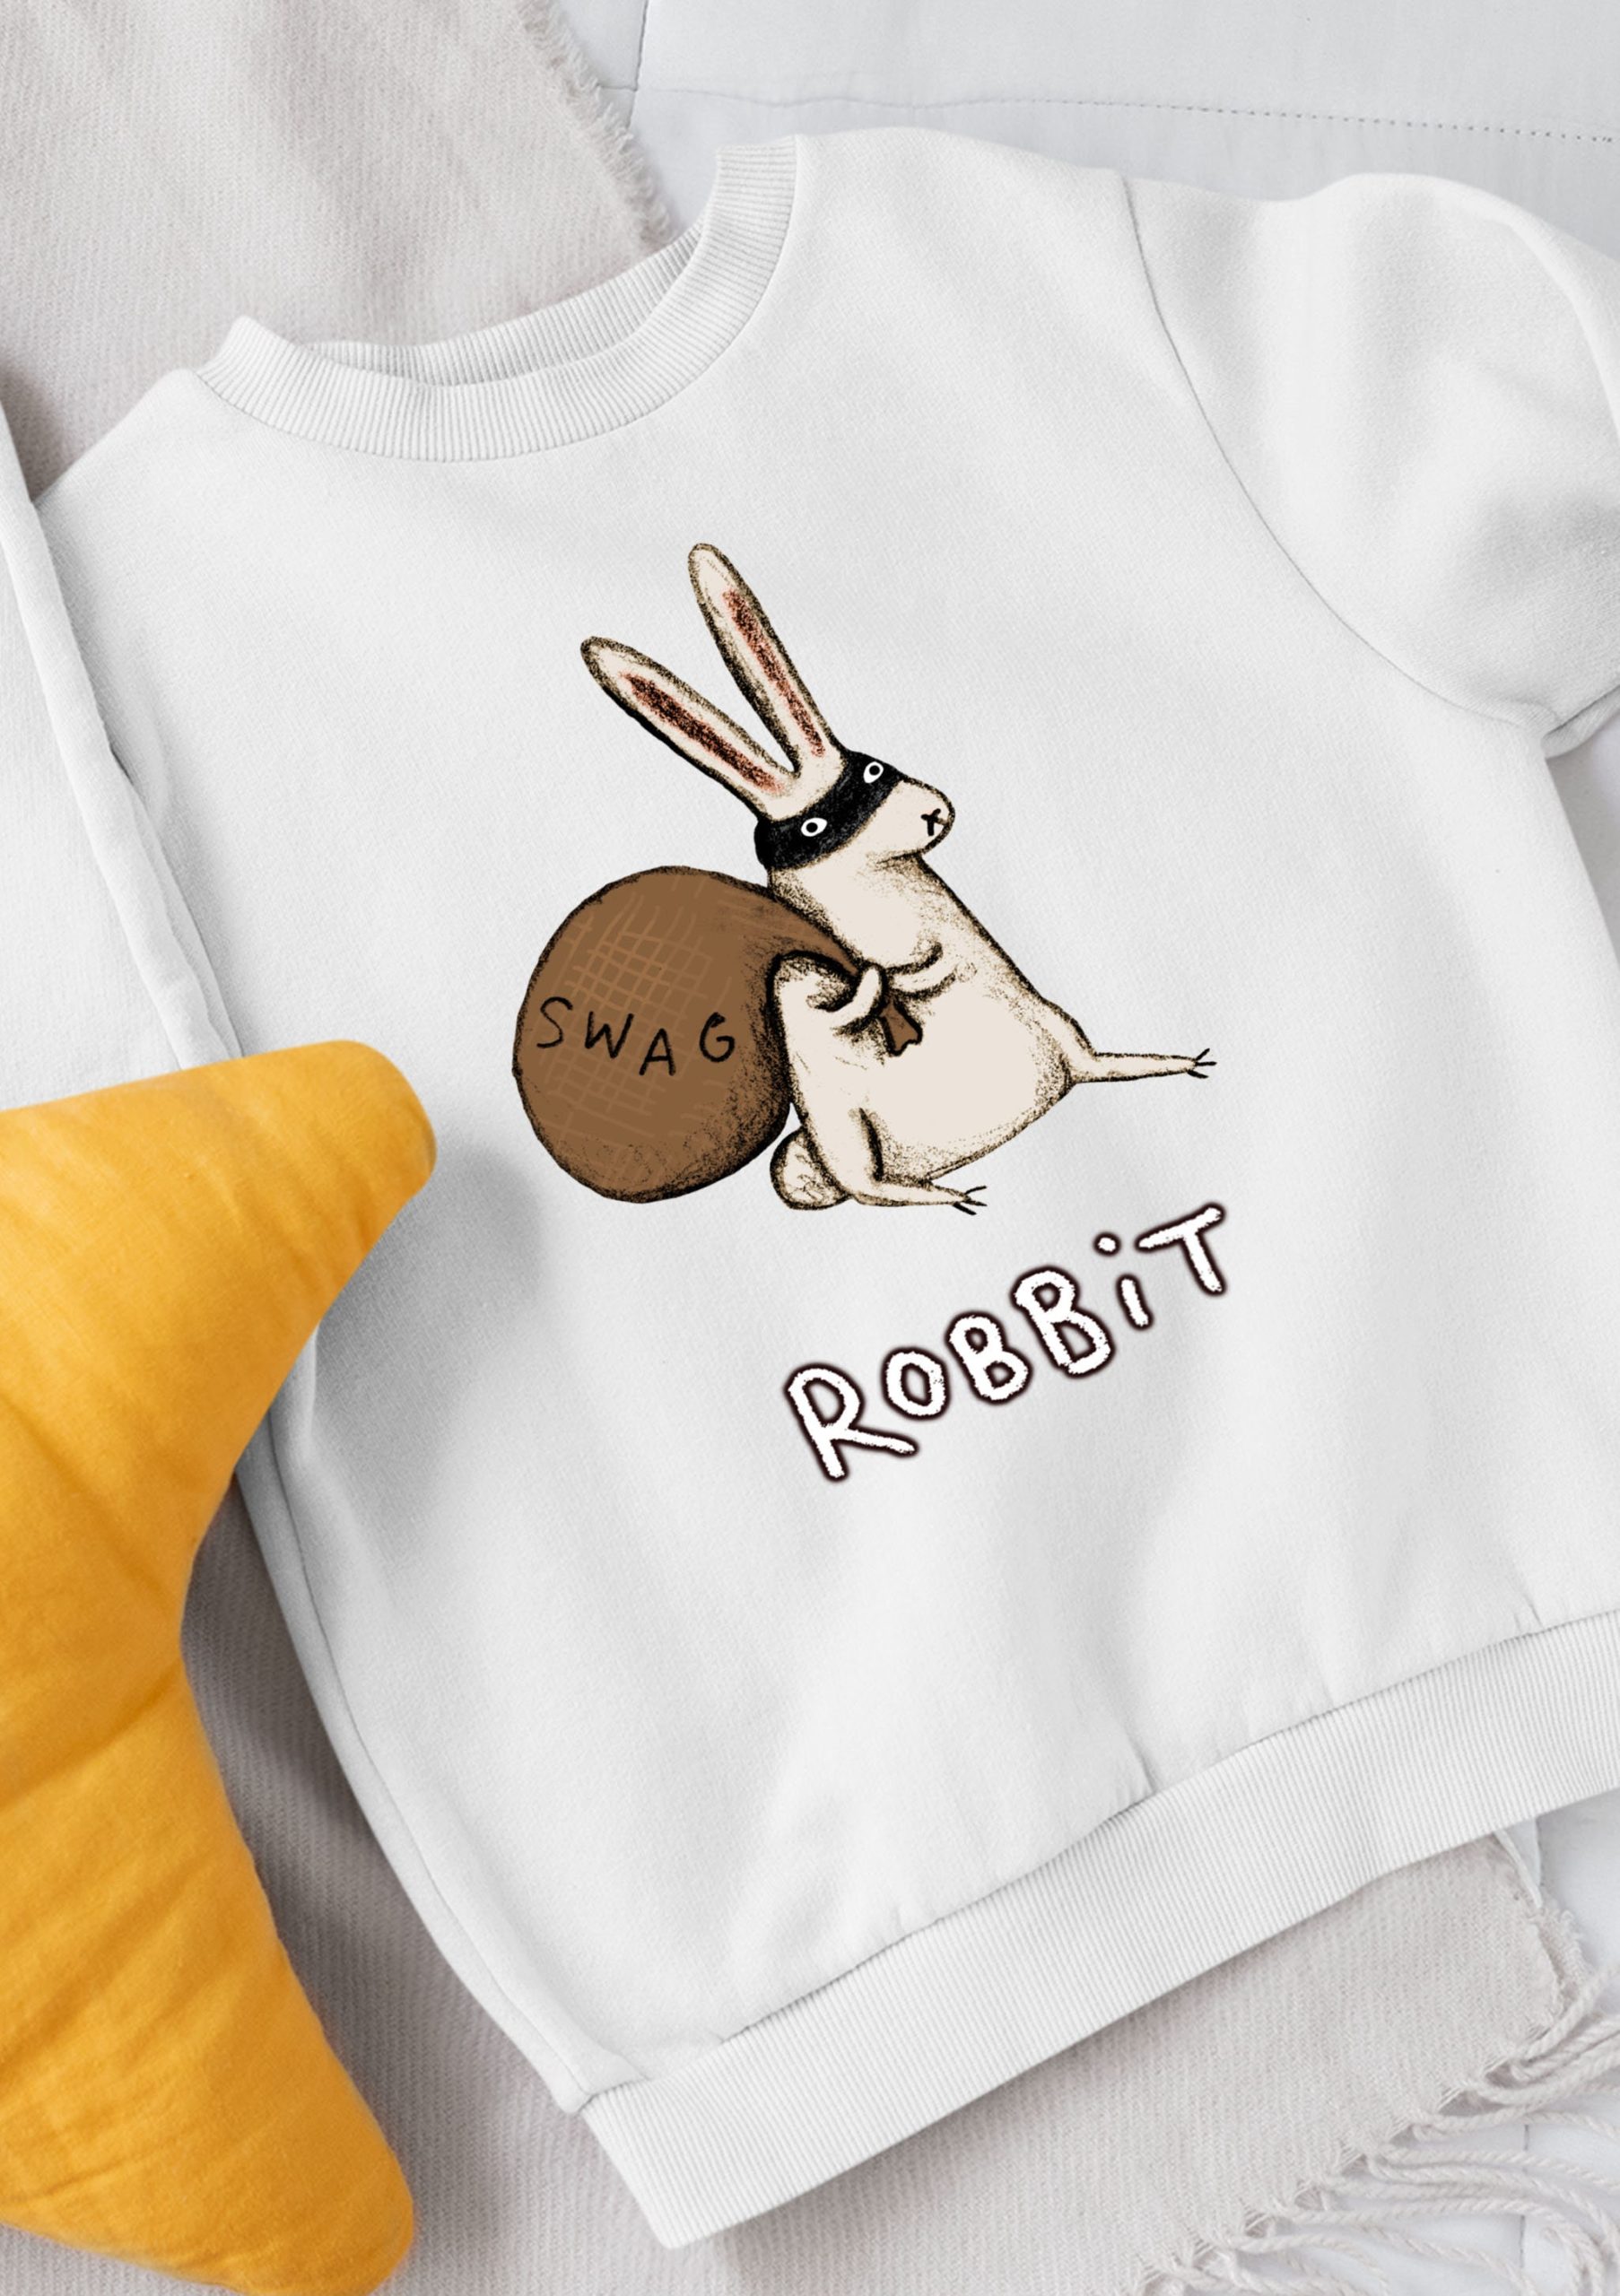 Robbit Bunny Shirt Cute Harajuku Unisex T-Shirt